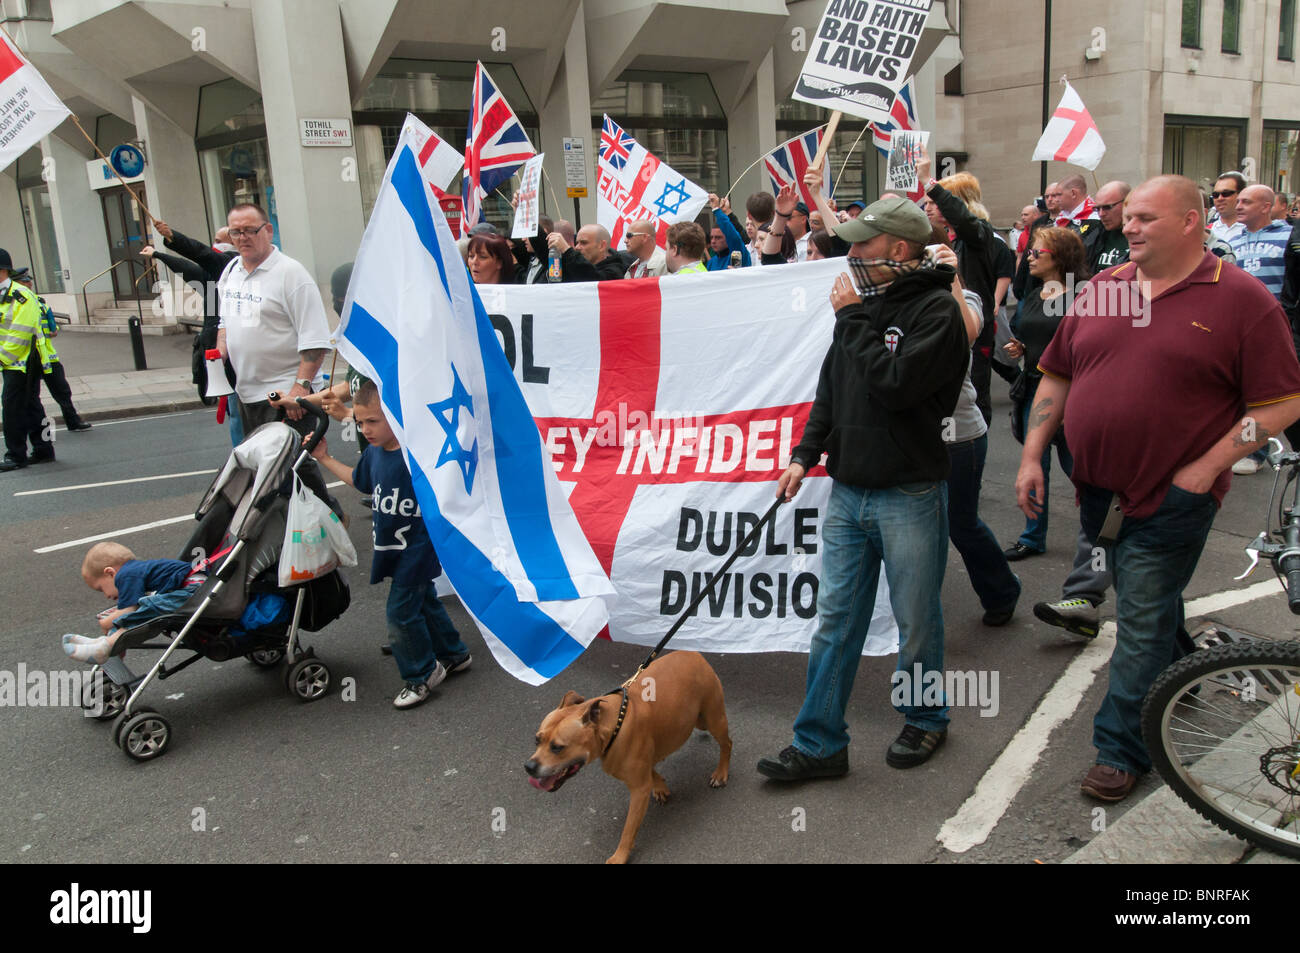 dudley-infidels-edl-flag-israeli-flag-dog-pushchair-at-head-of-english-BNRFAK.jpg